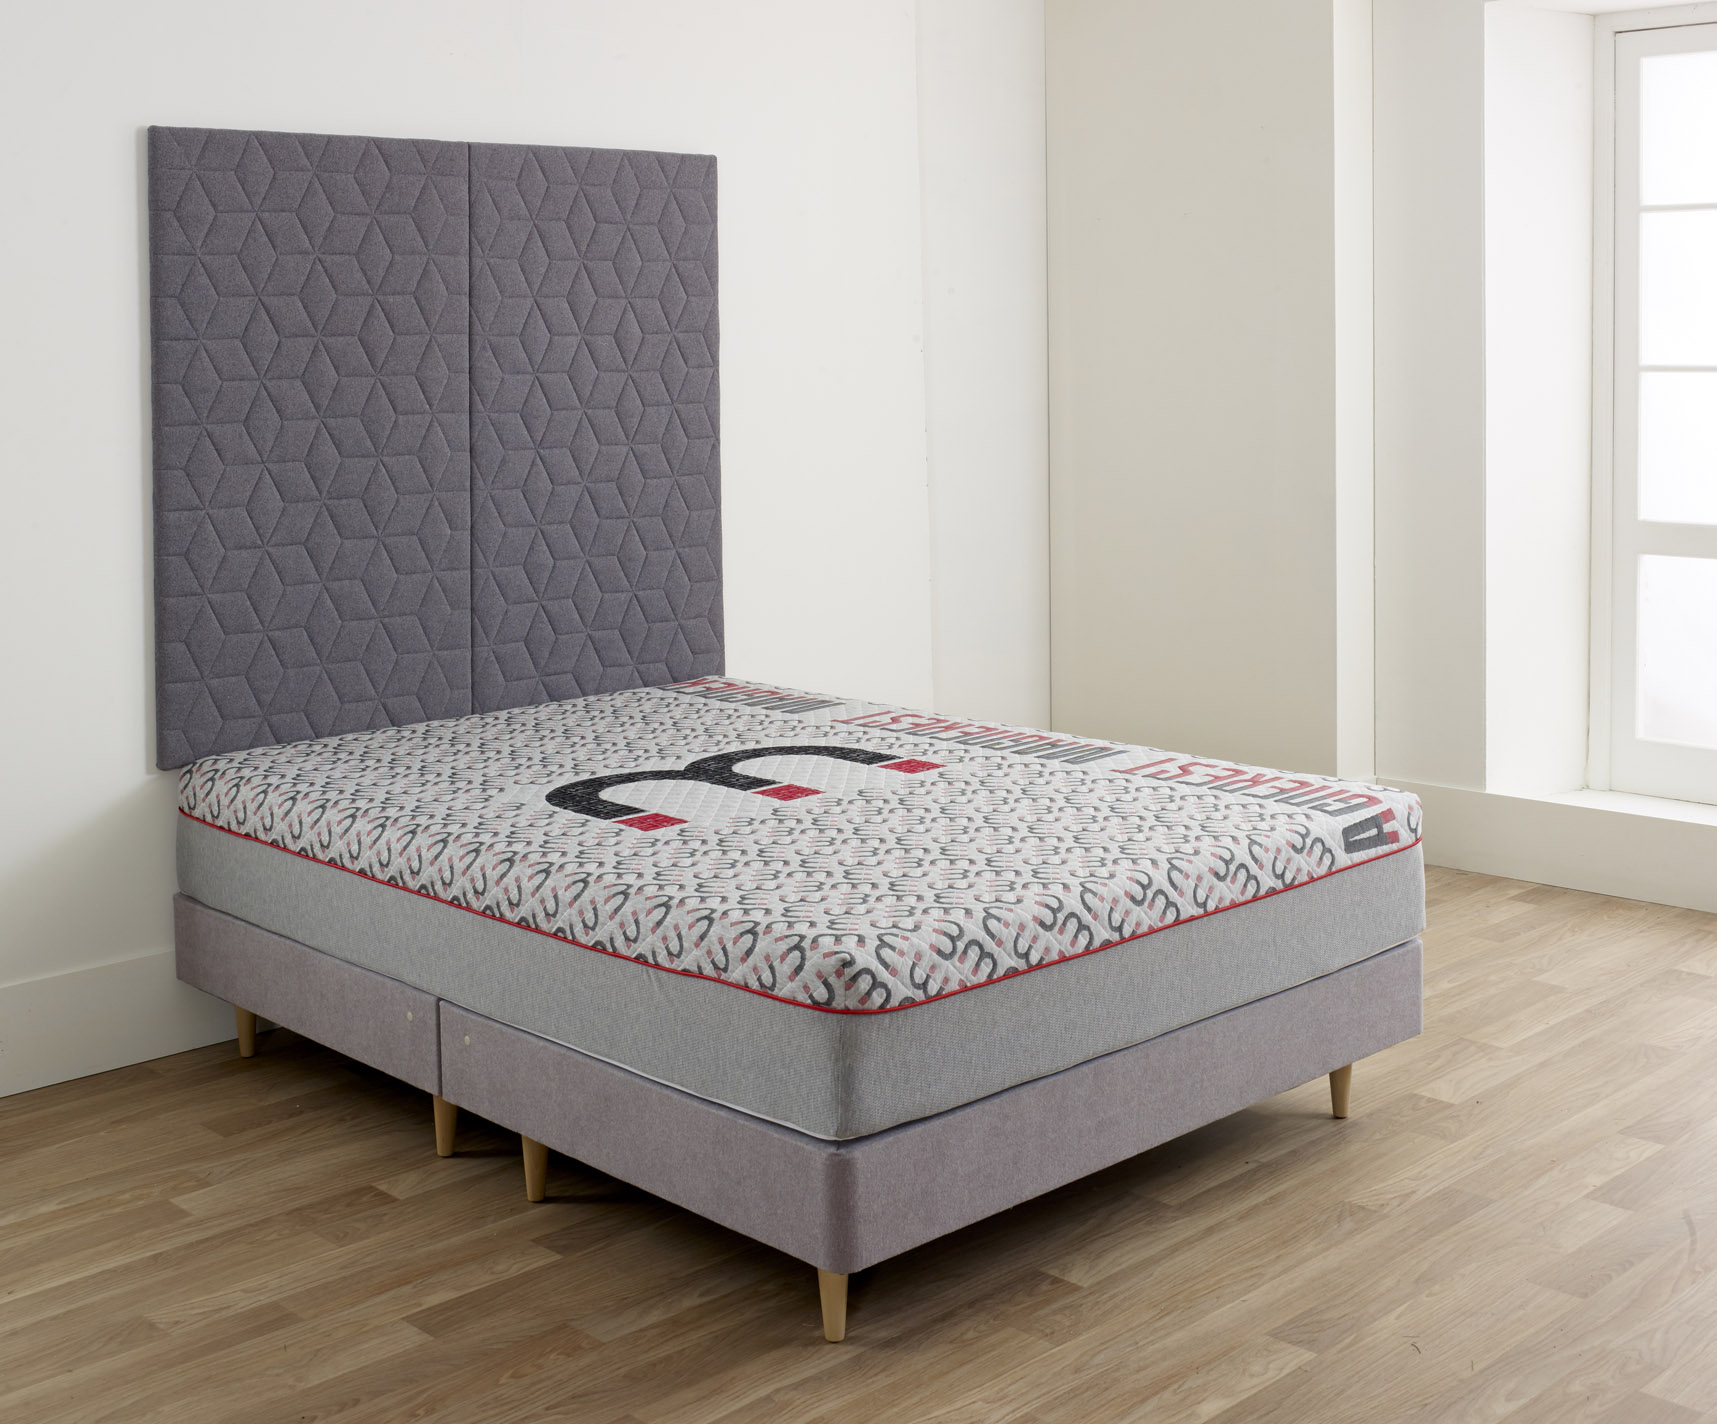 Magnerest mattress with a grey headboard